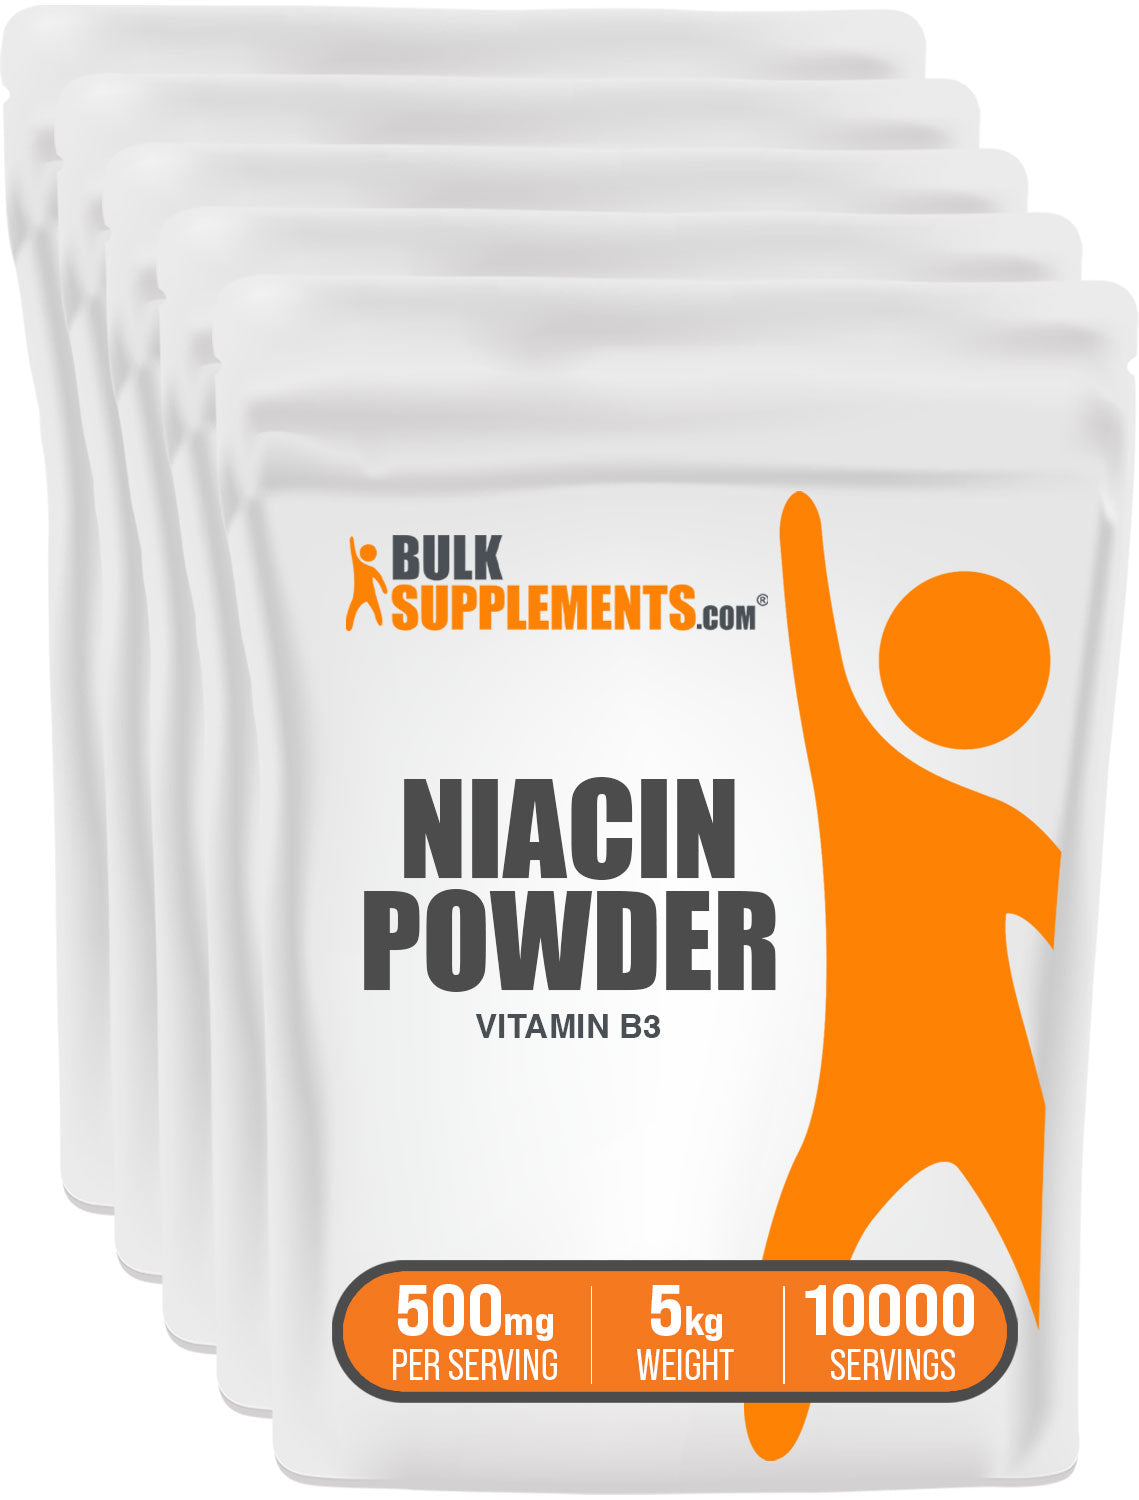 BulkSupplements Niacin Powder Vitamin B3 5g bag